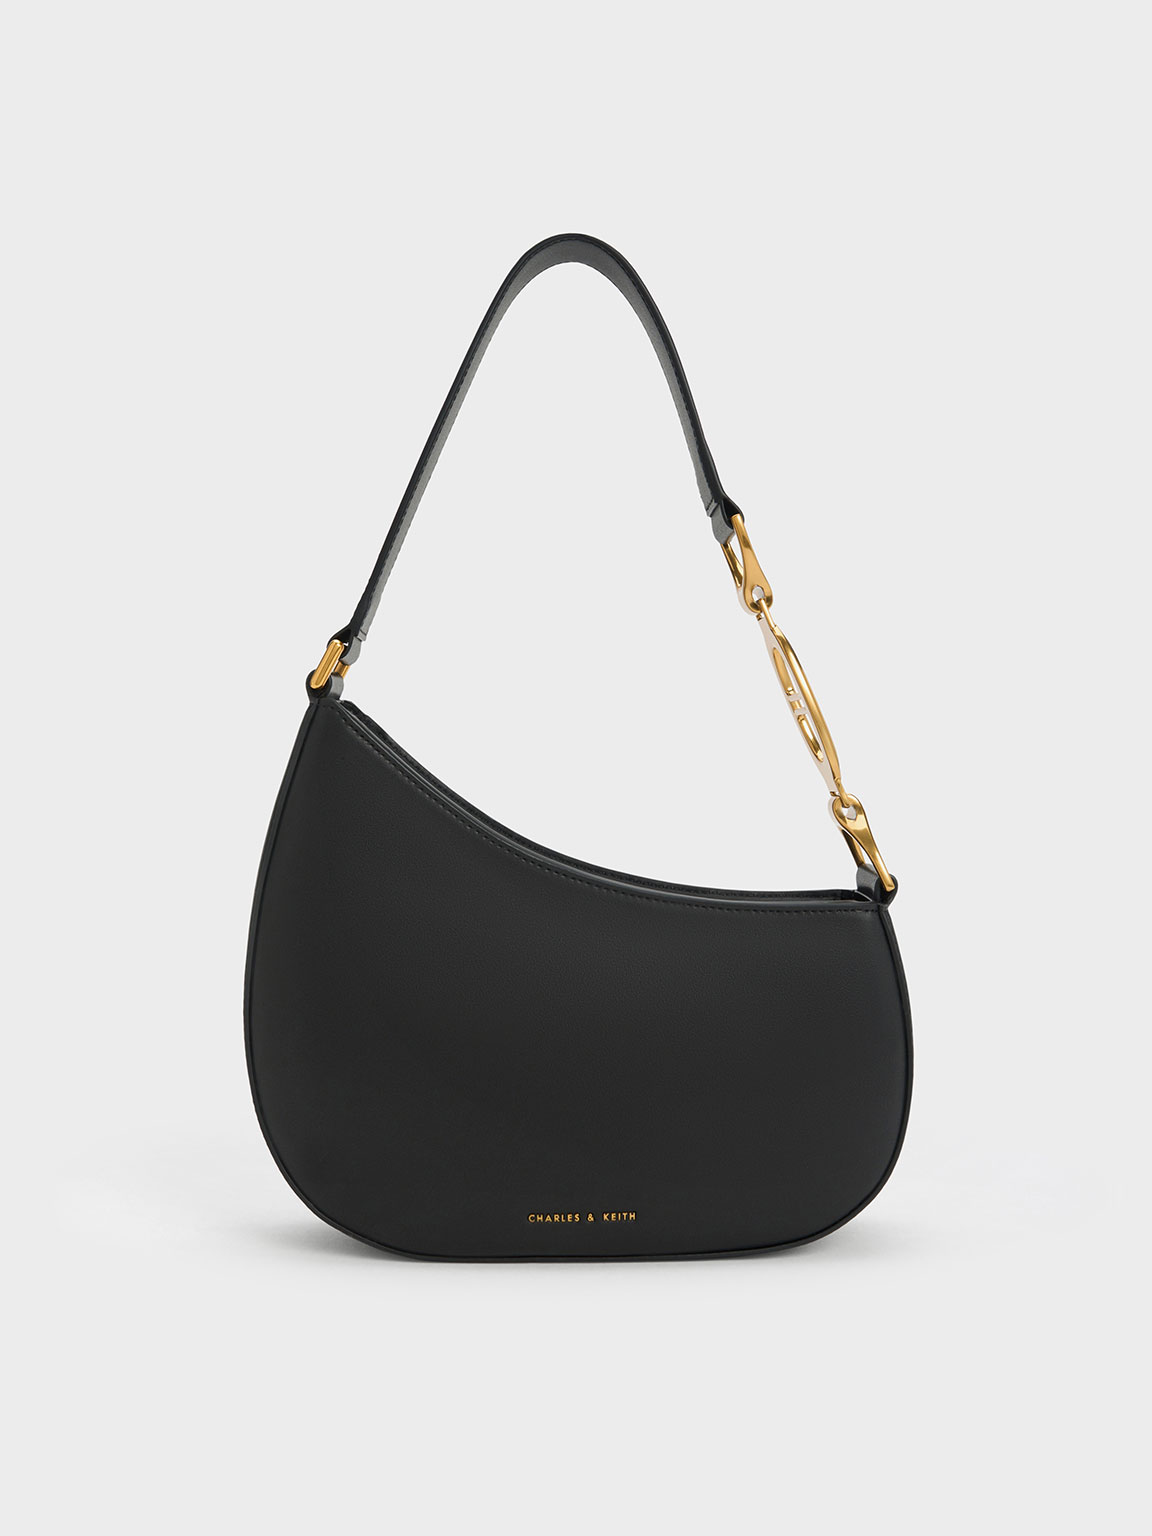 2023 New Fashion Portable Messenger Bag Trend Ladies Designer